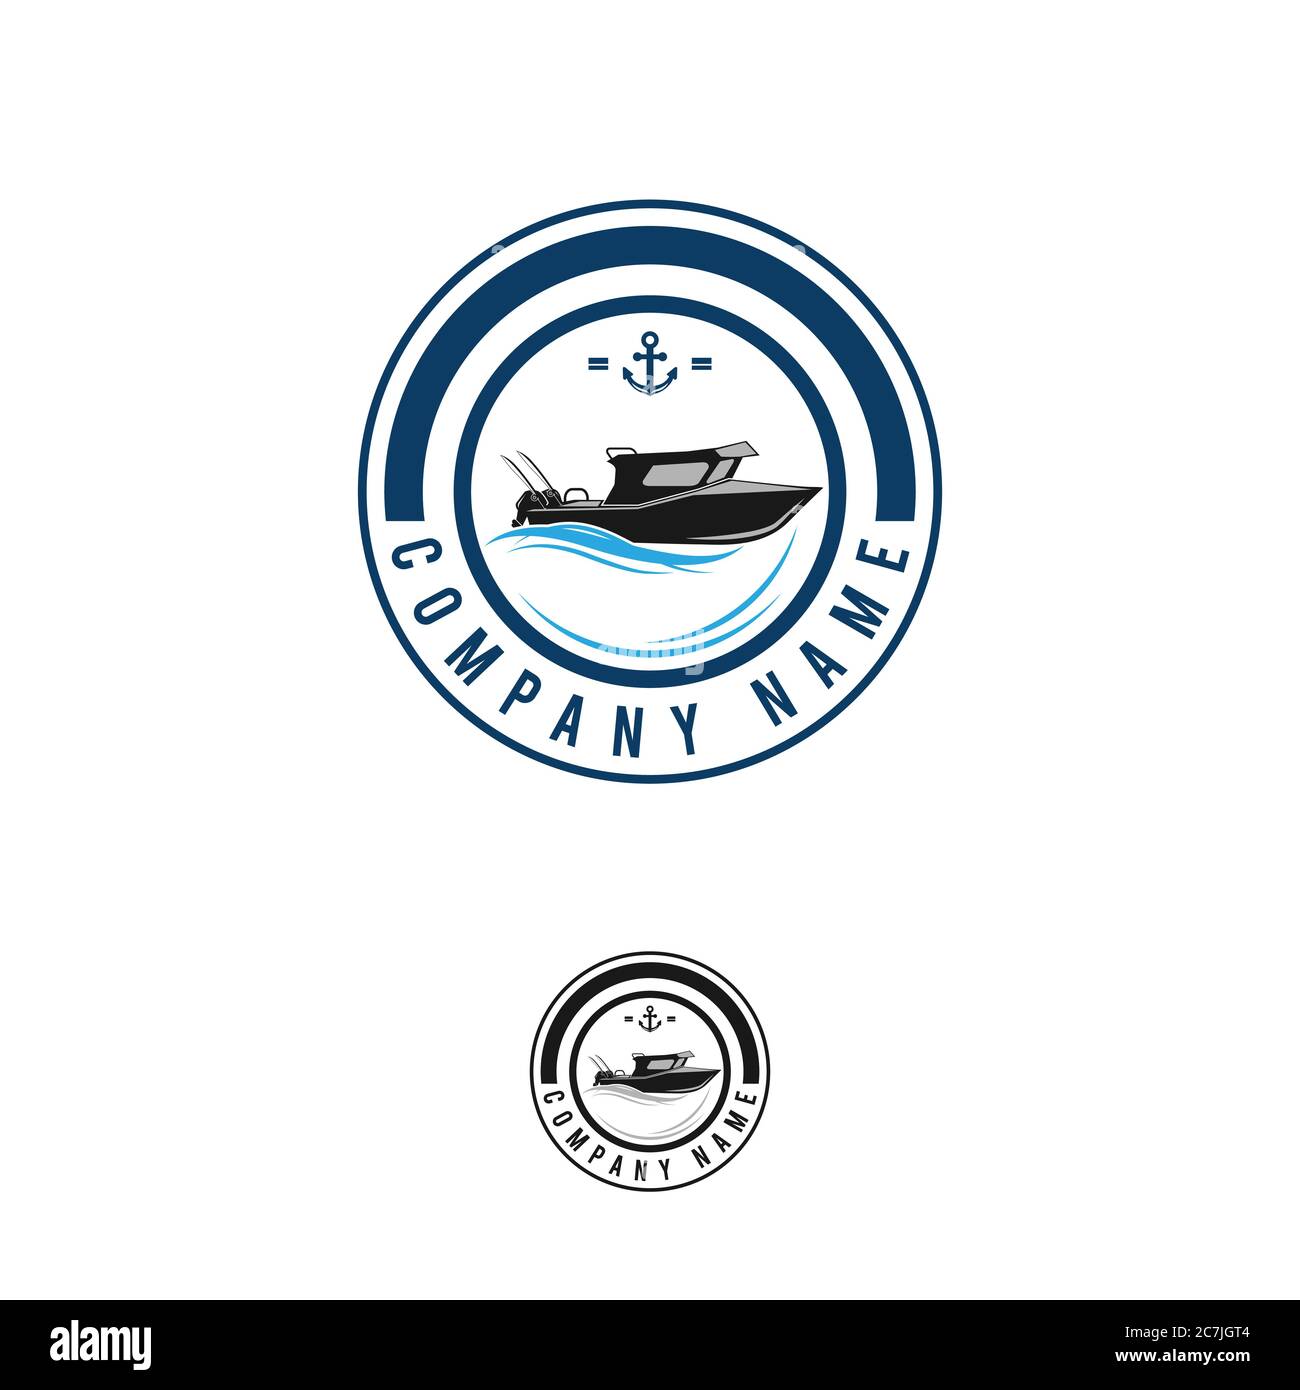 https://c8.alamy.com/comp/2C7JGT4/fishing-logo-collection-with-fisherman-on-fish-boat-fishing-boat-logo-template-vector-illustration-eps10-2C7JGT4.jpg